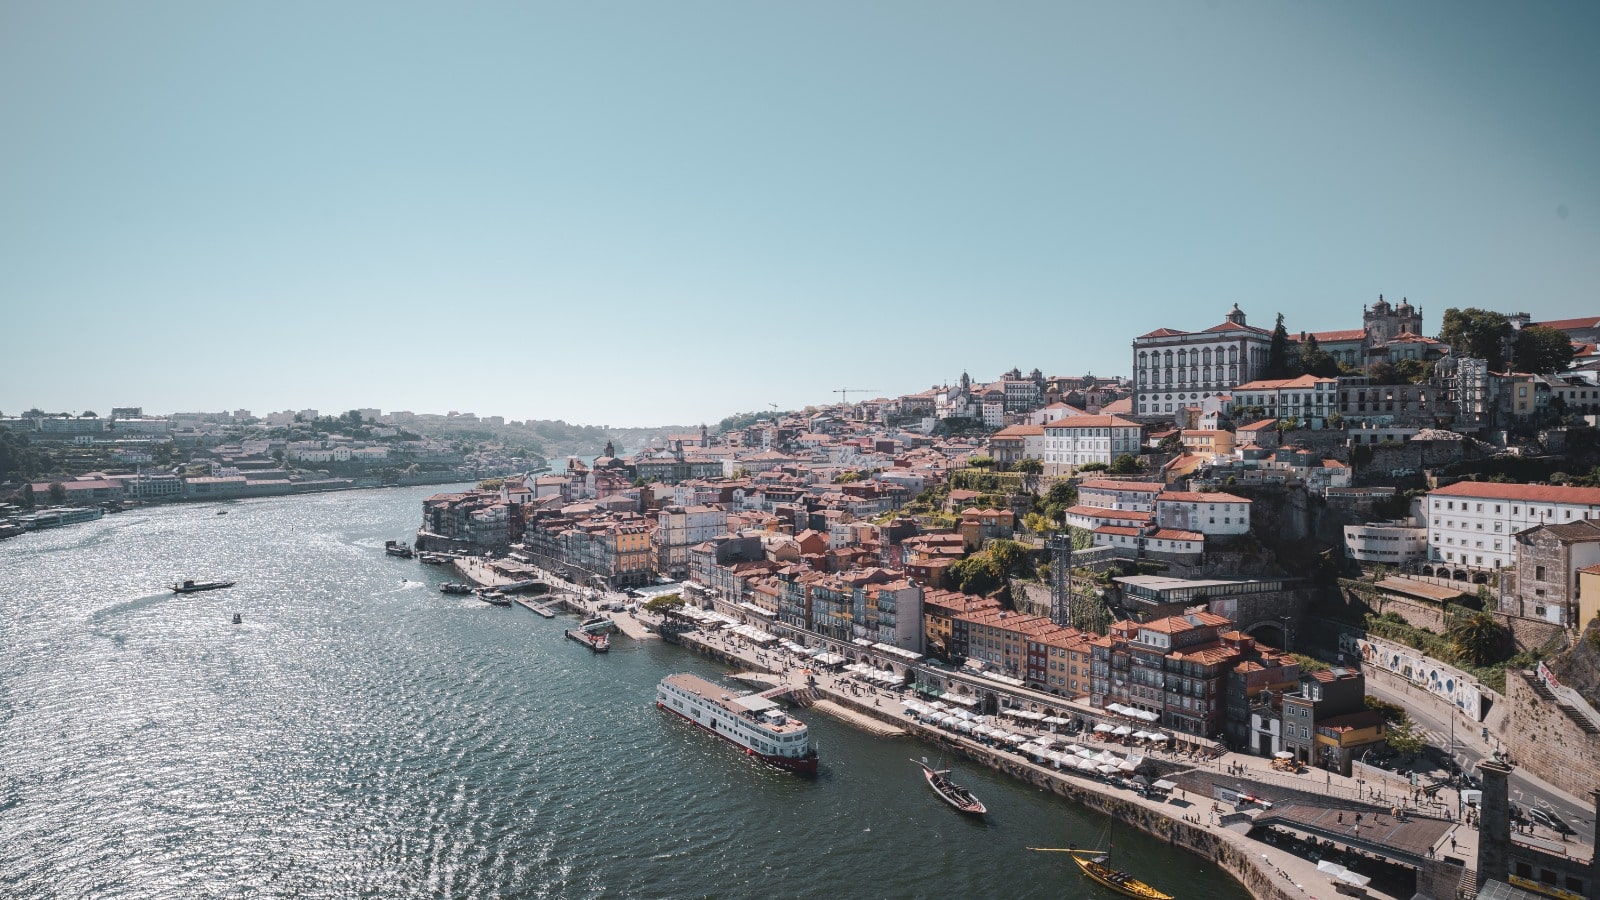 The town of Porto, Portugal